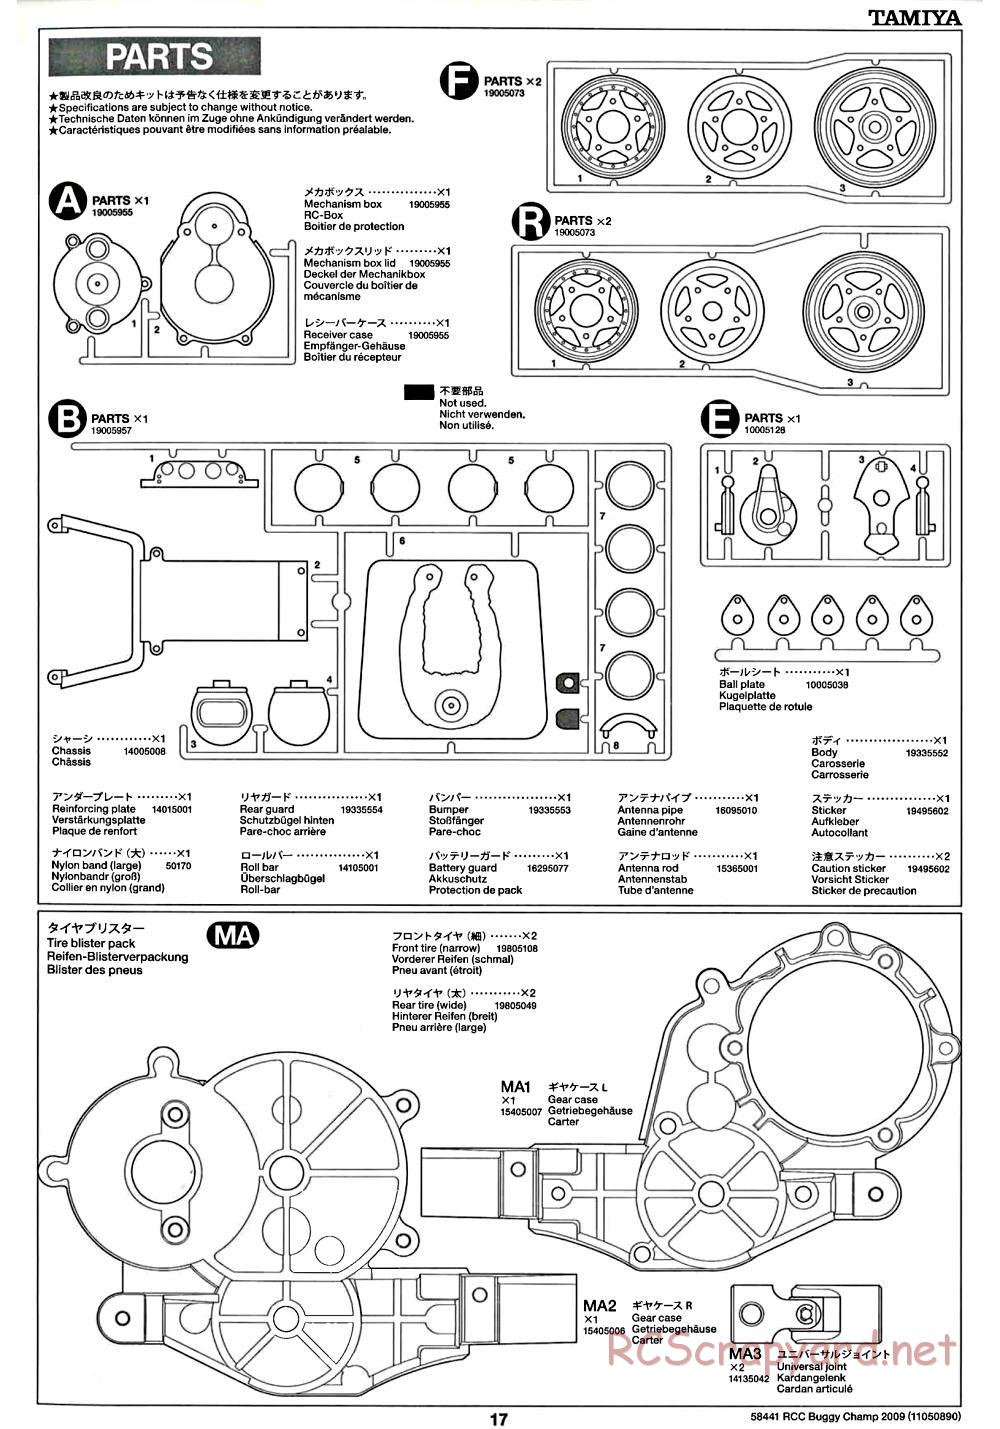 Tamiya - Buggy Champ Chassis - Manual - Page 17